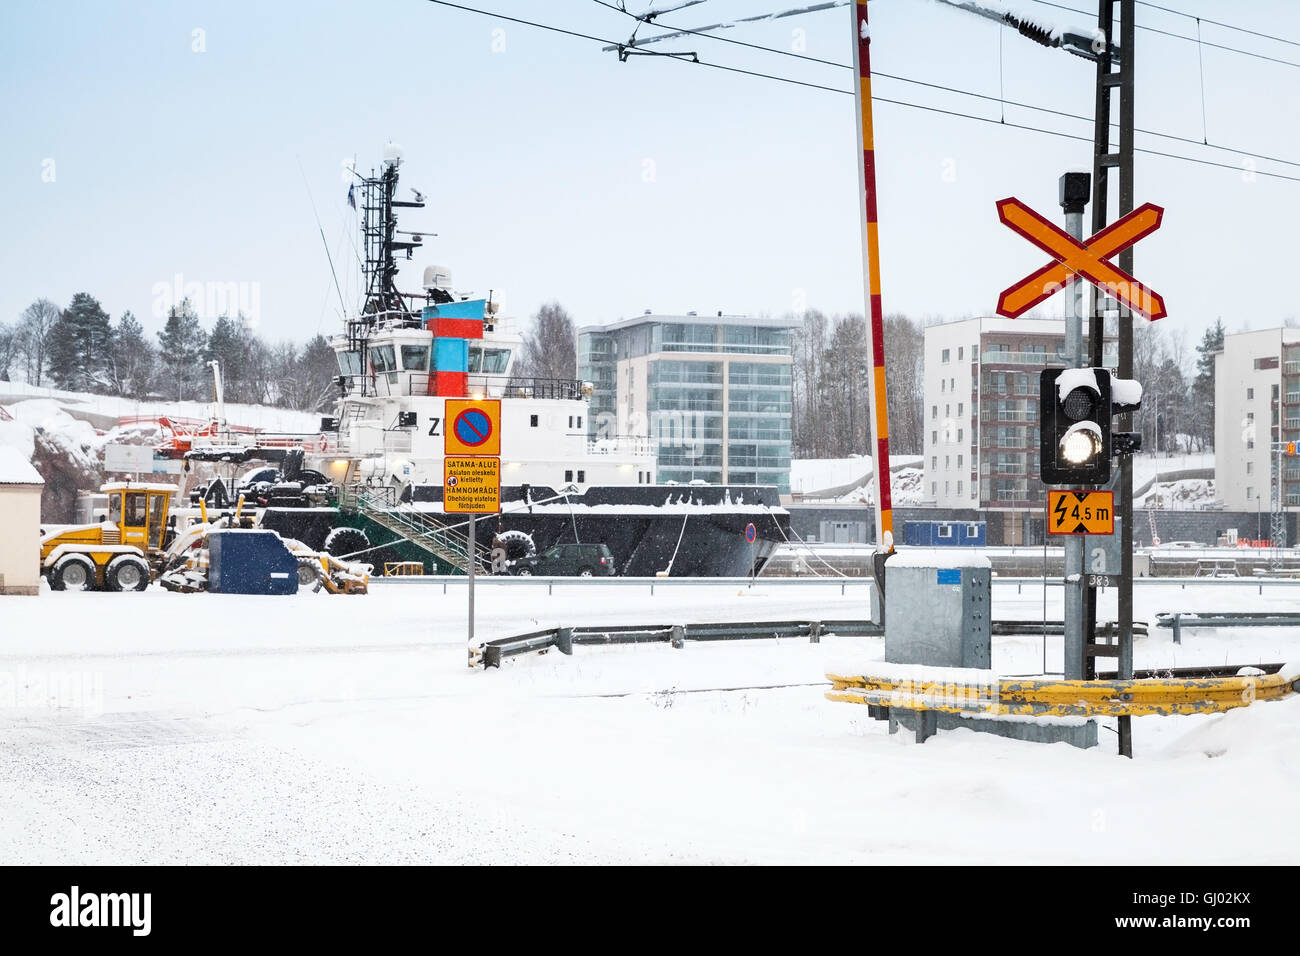 Turky, Finland - January 17, 2016: Railroad crossing near port in snowy winter day Stock Photo